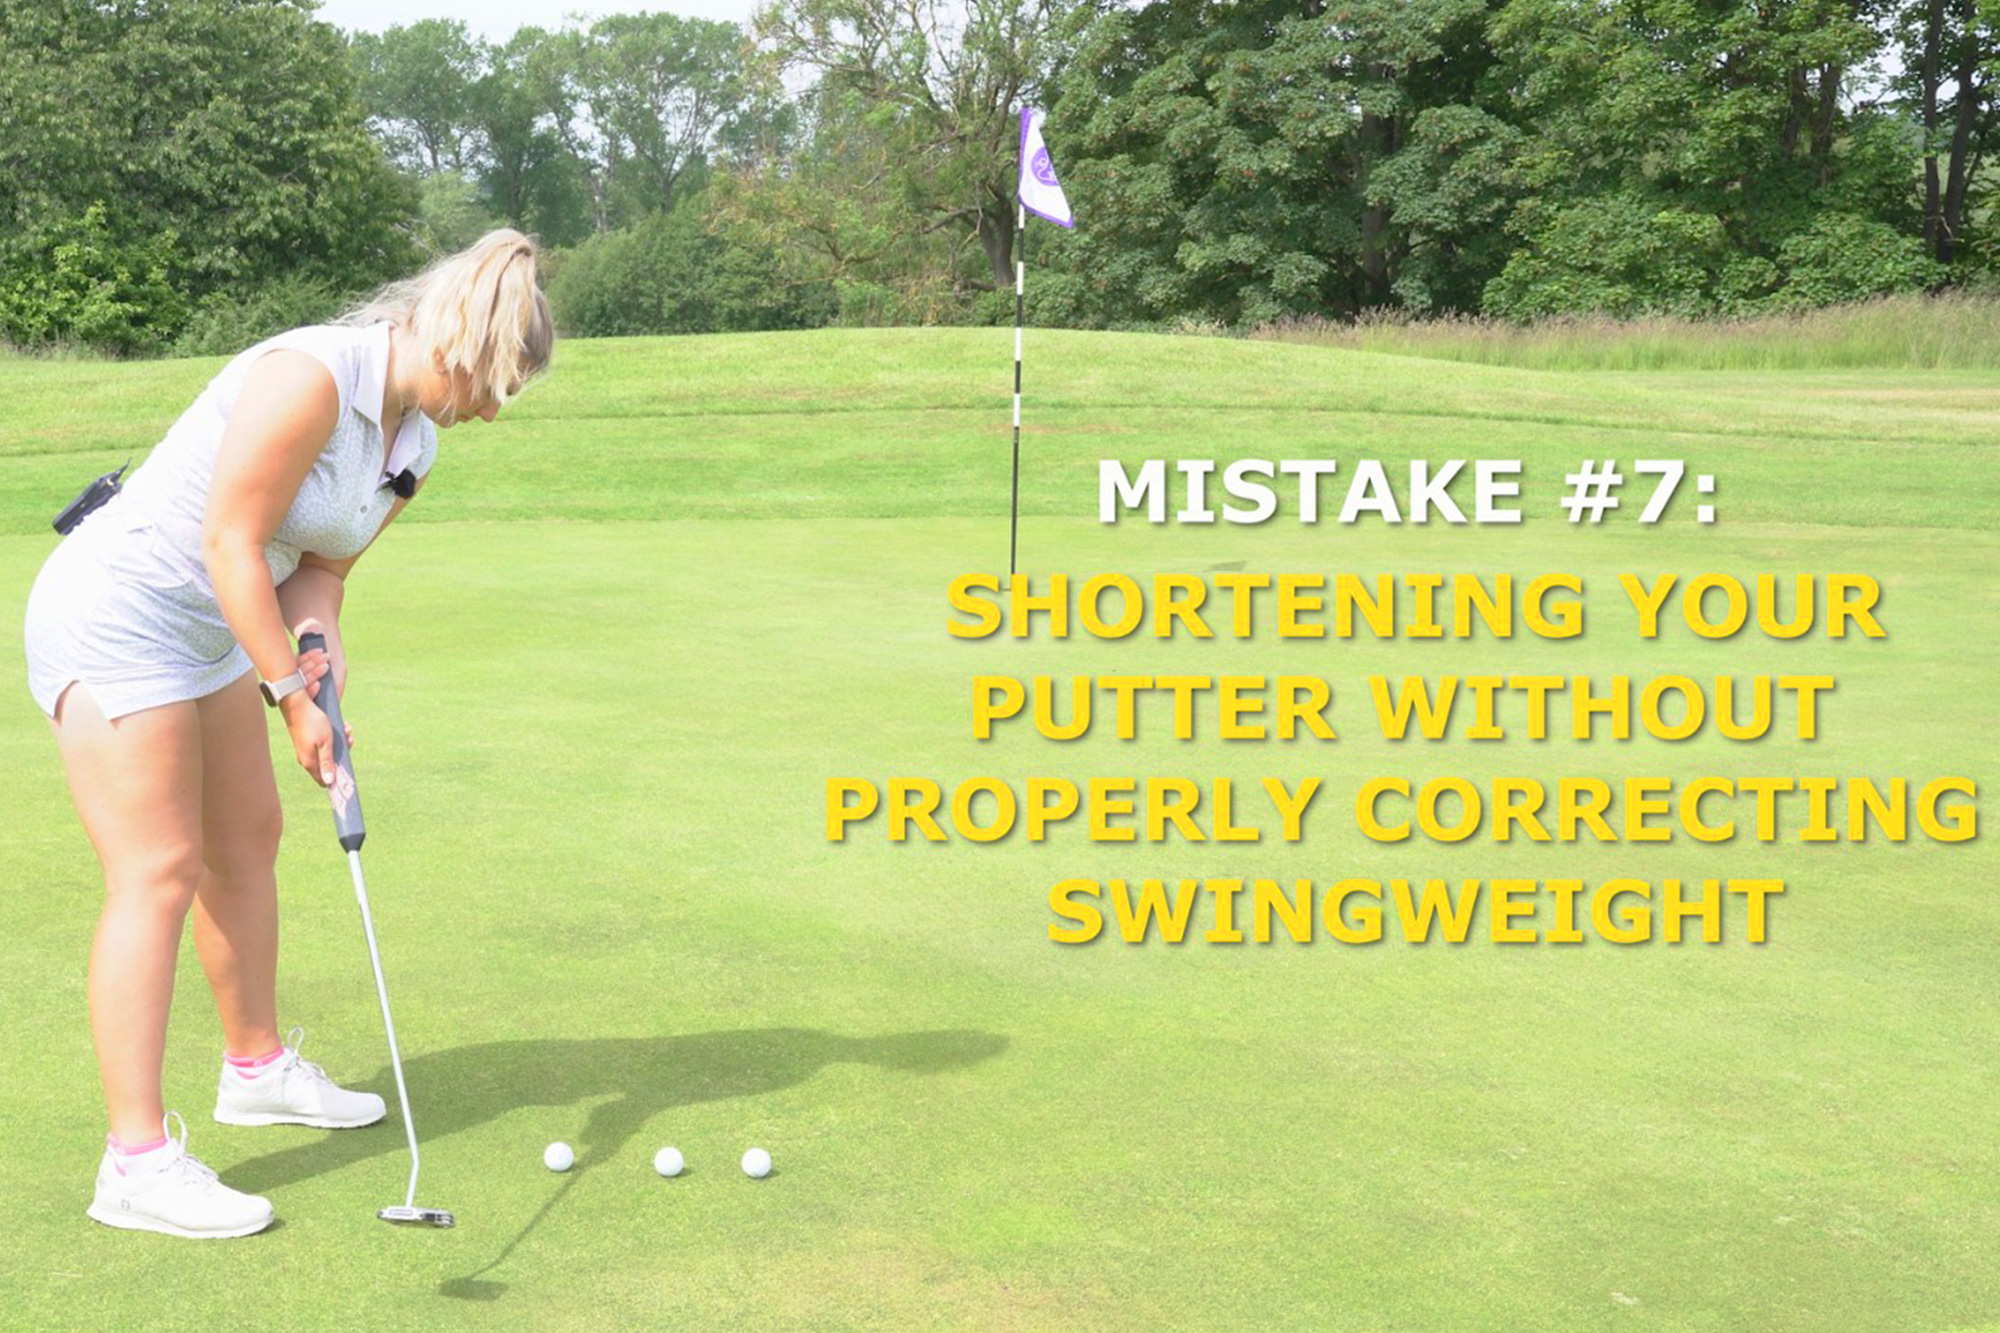 Golf Equipment Mistakes